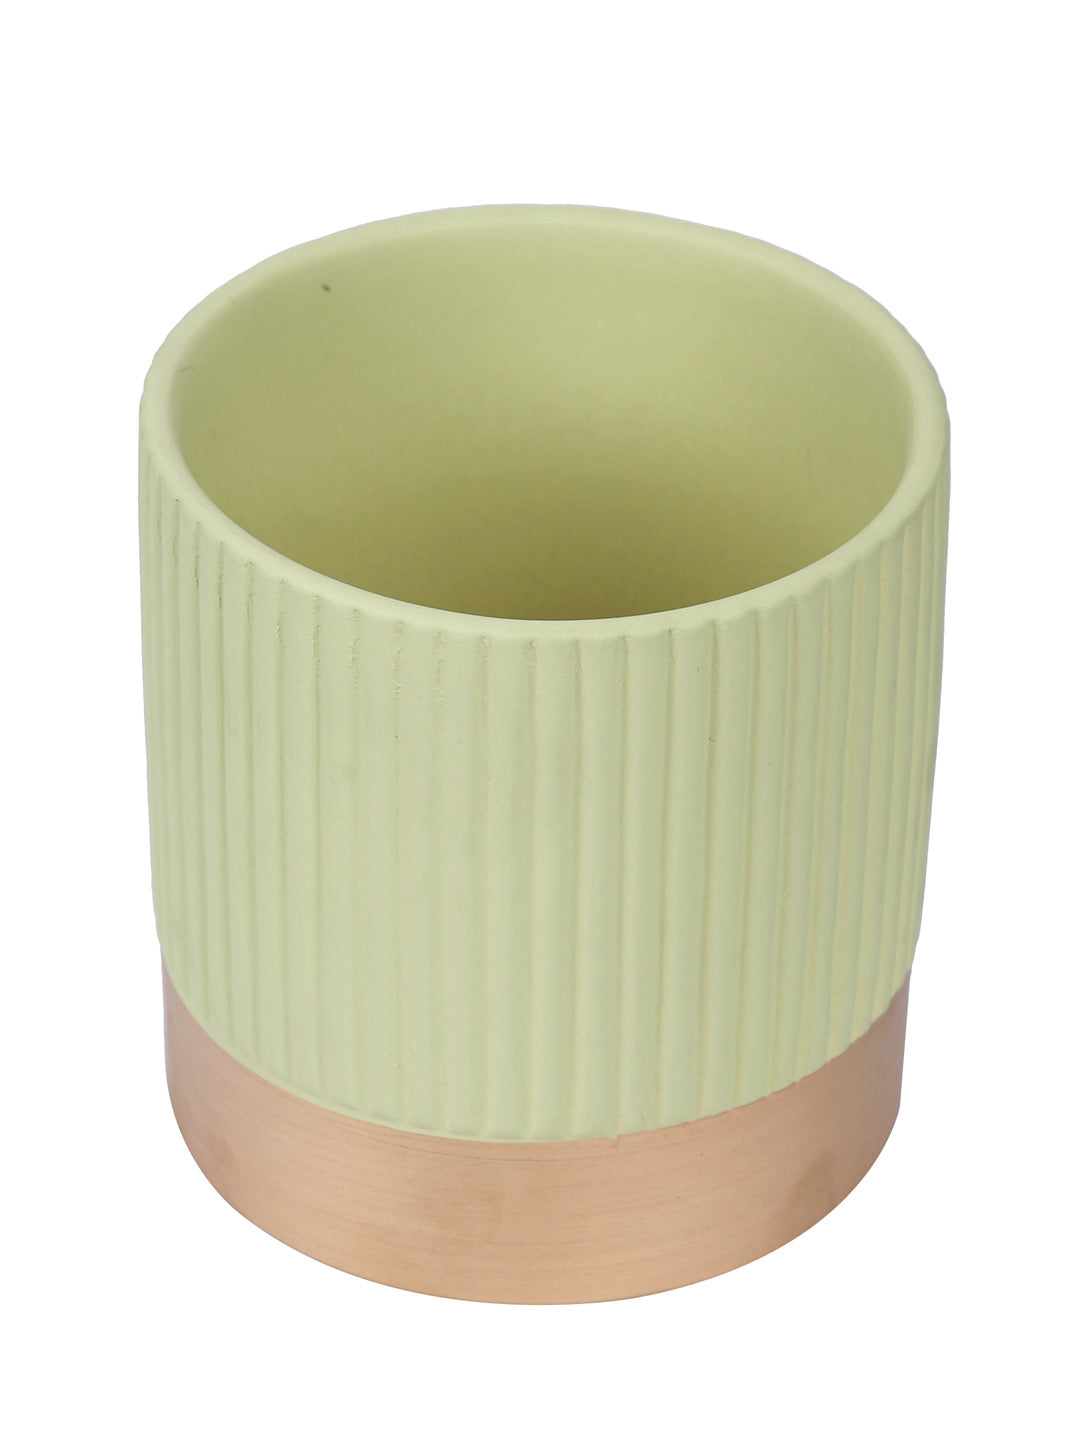 Fluted Design Ceramic Planter with Golden Border - Default Title (CHC22506YE)